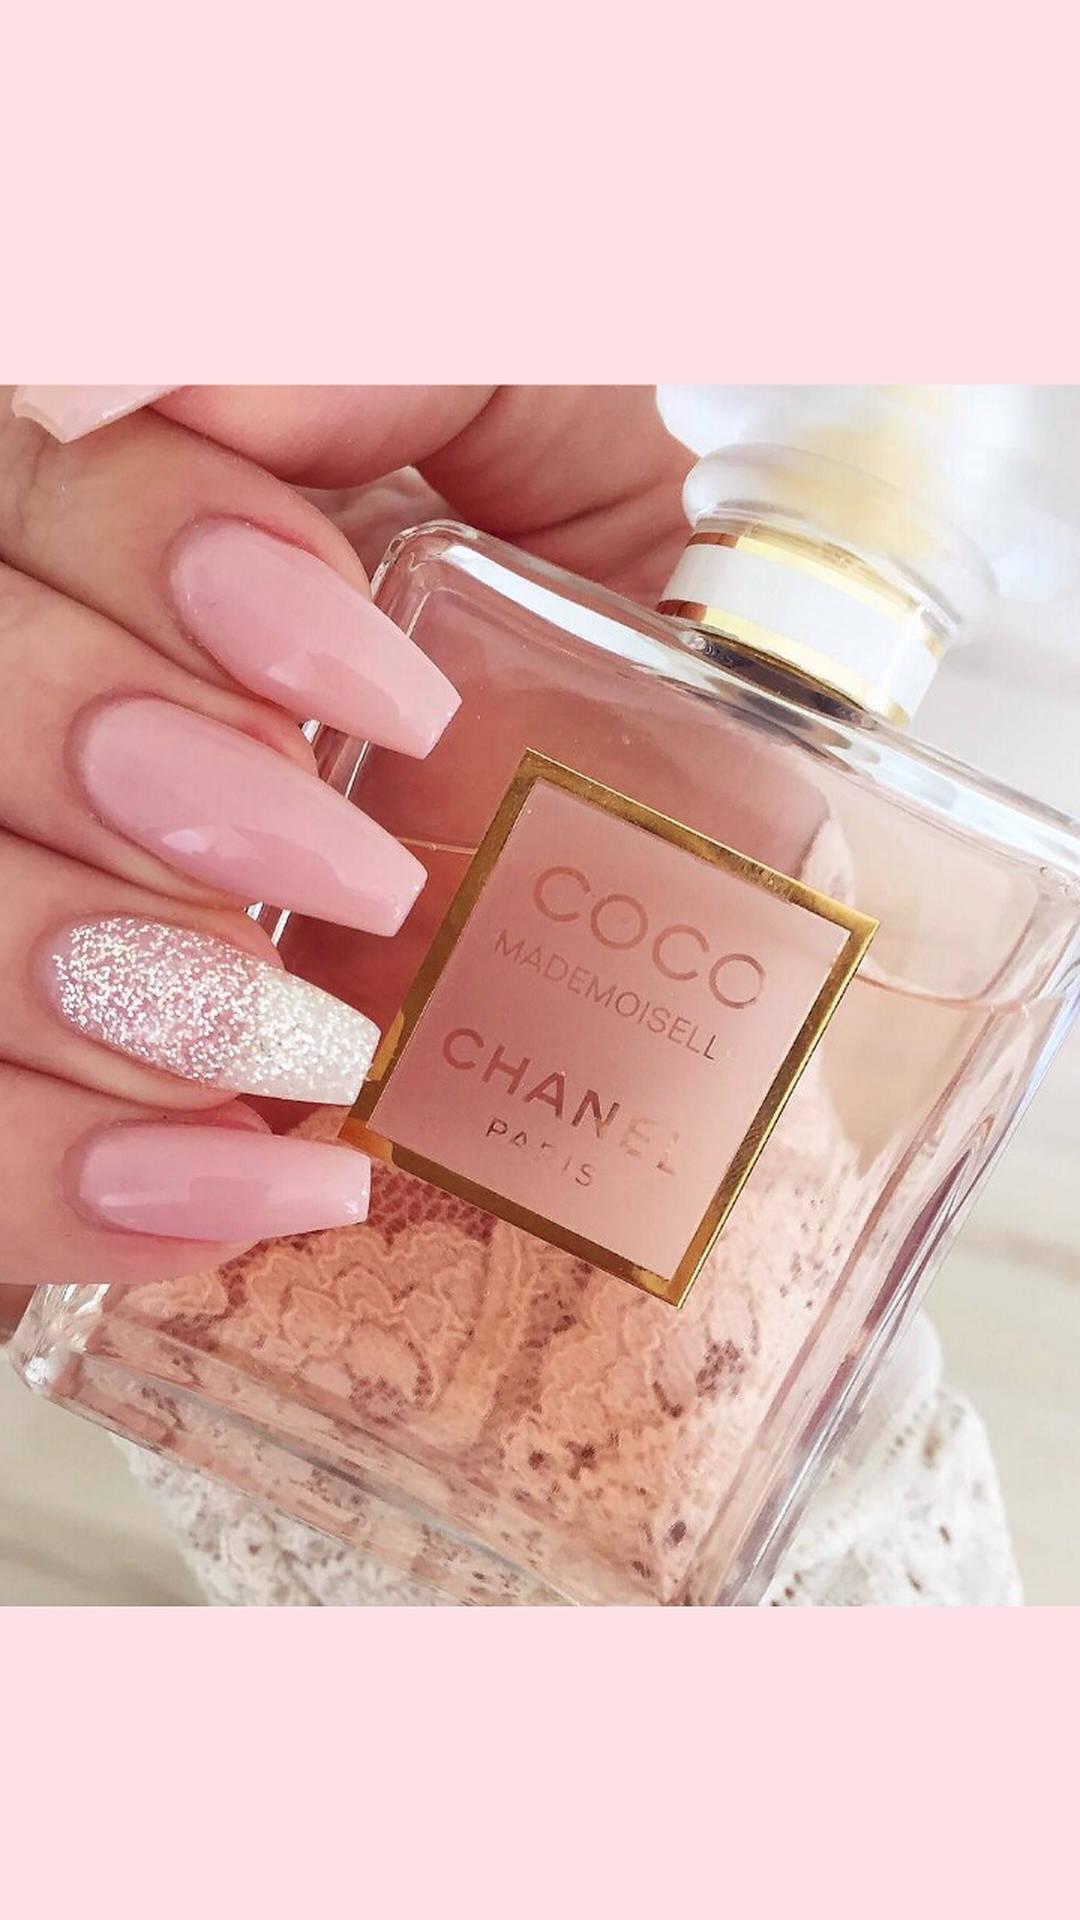 Coco Chanel Nails